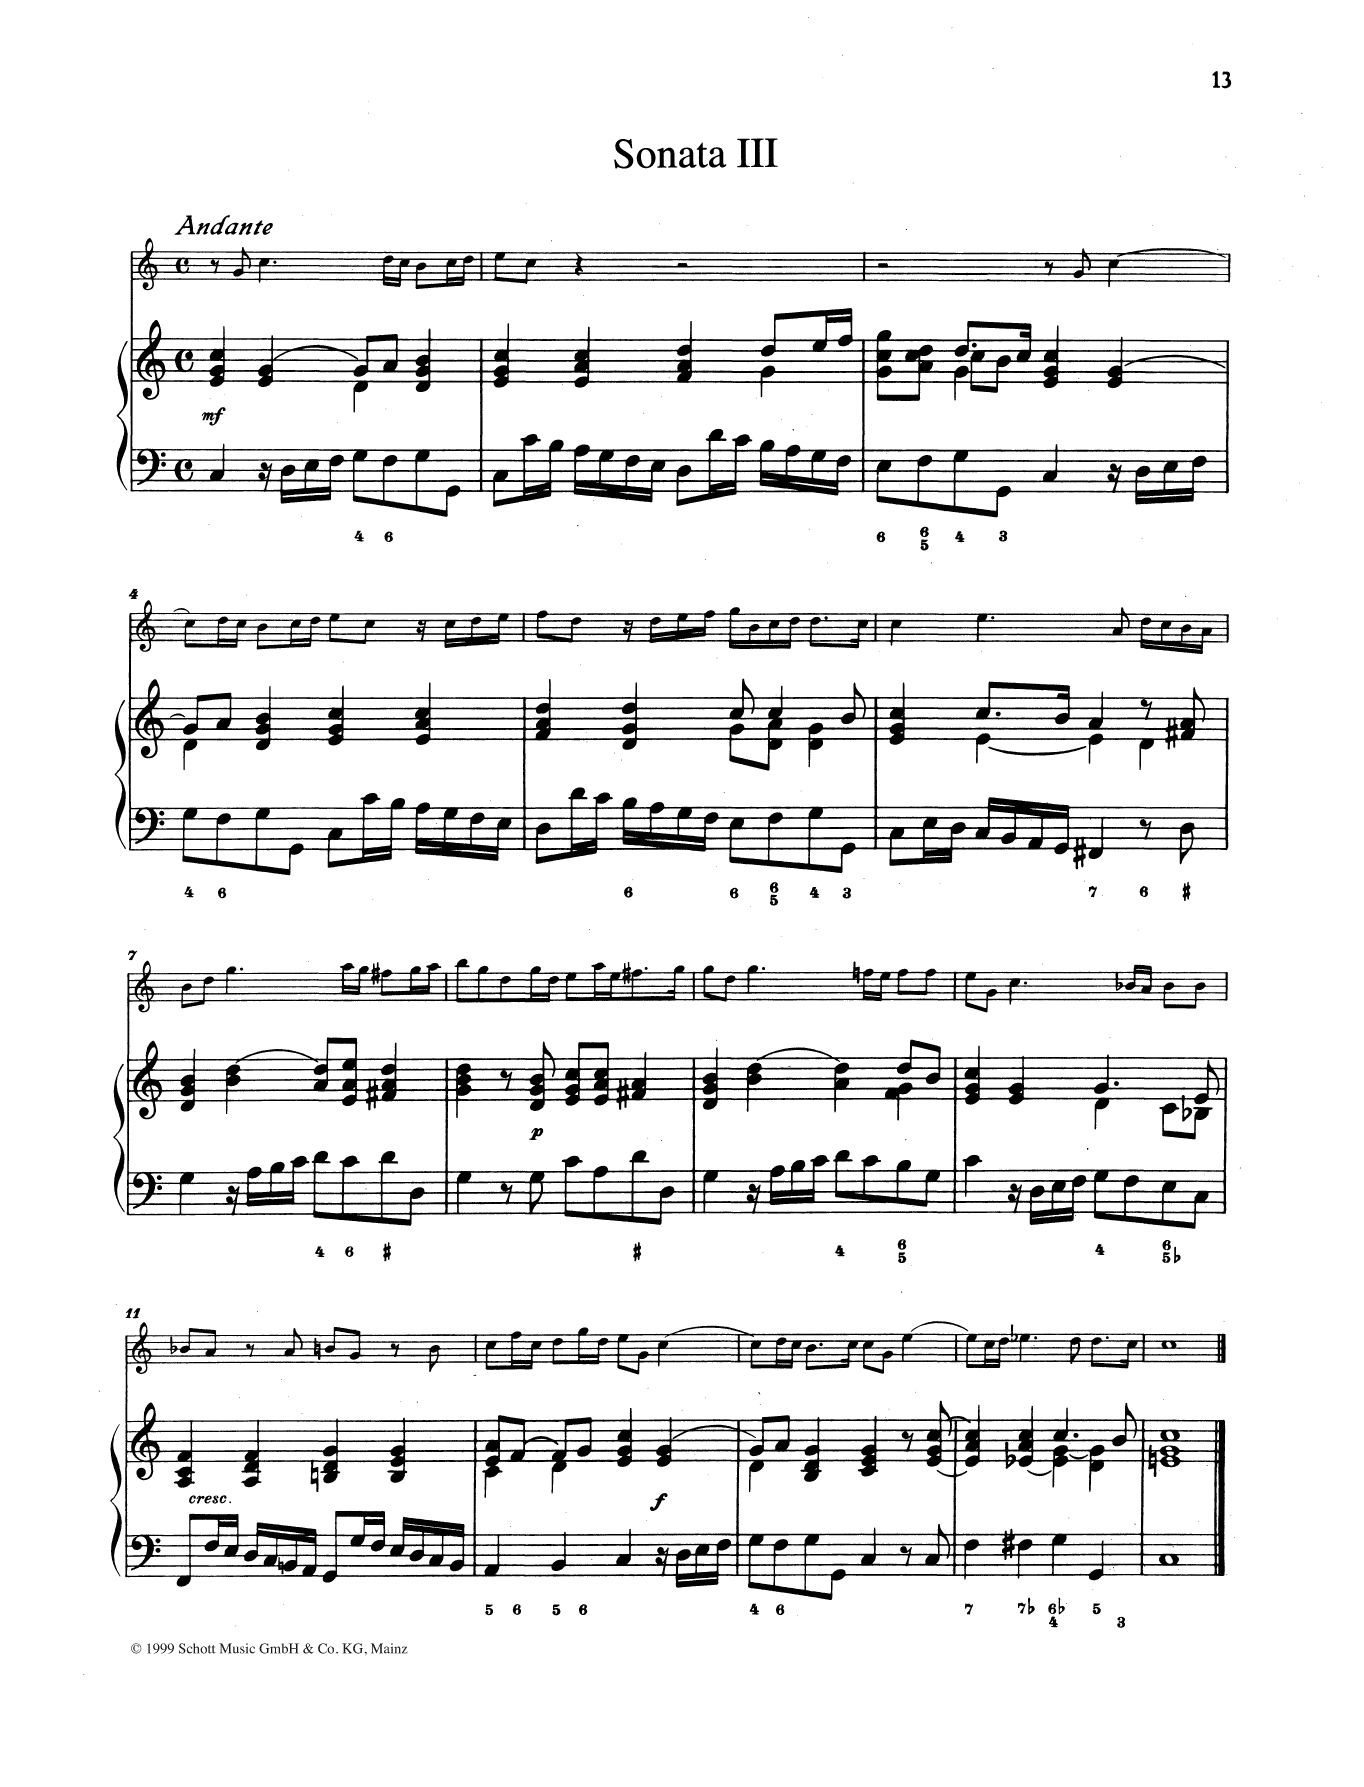 Baldassare Galuppi Sonata No. 3 Sheet Music Notes & Chords for String Solo - Download or Print PDF